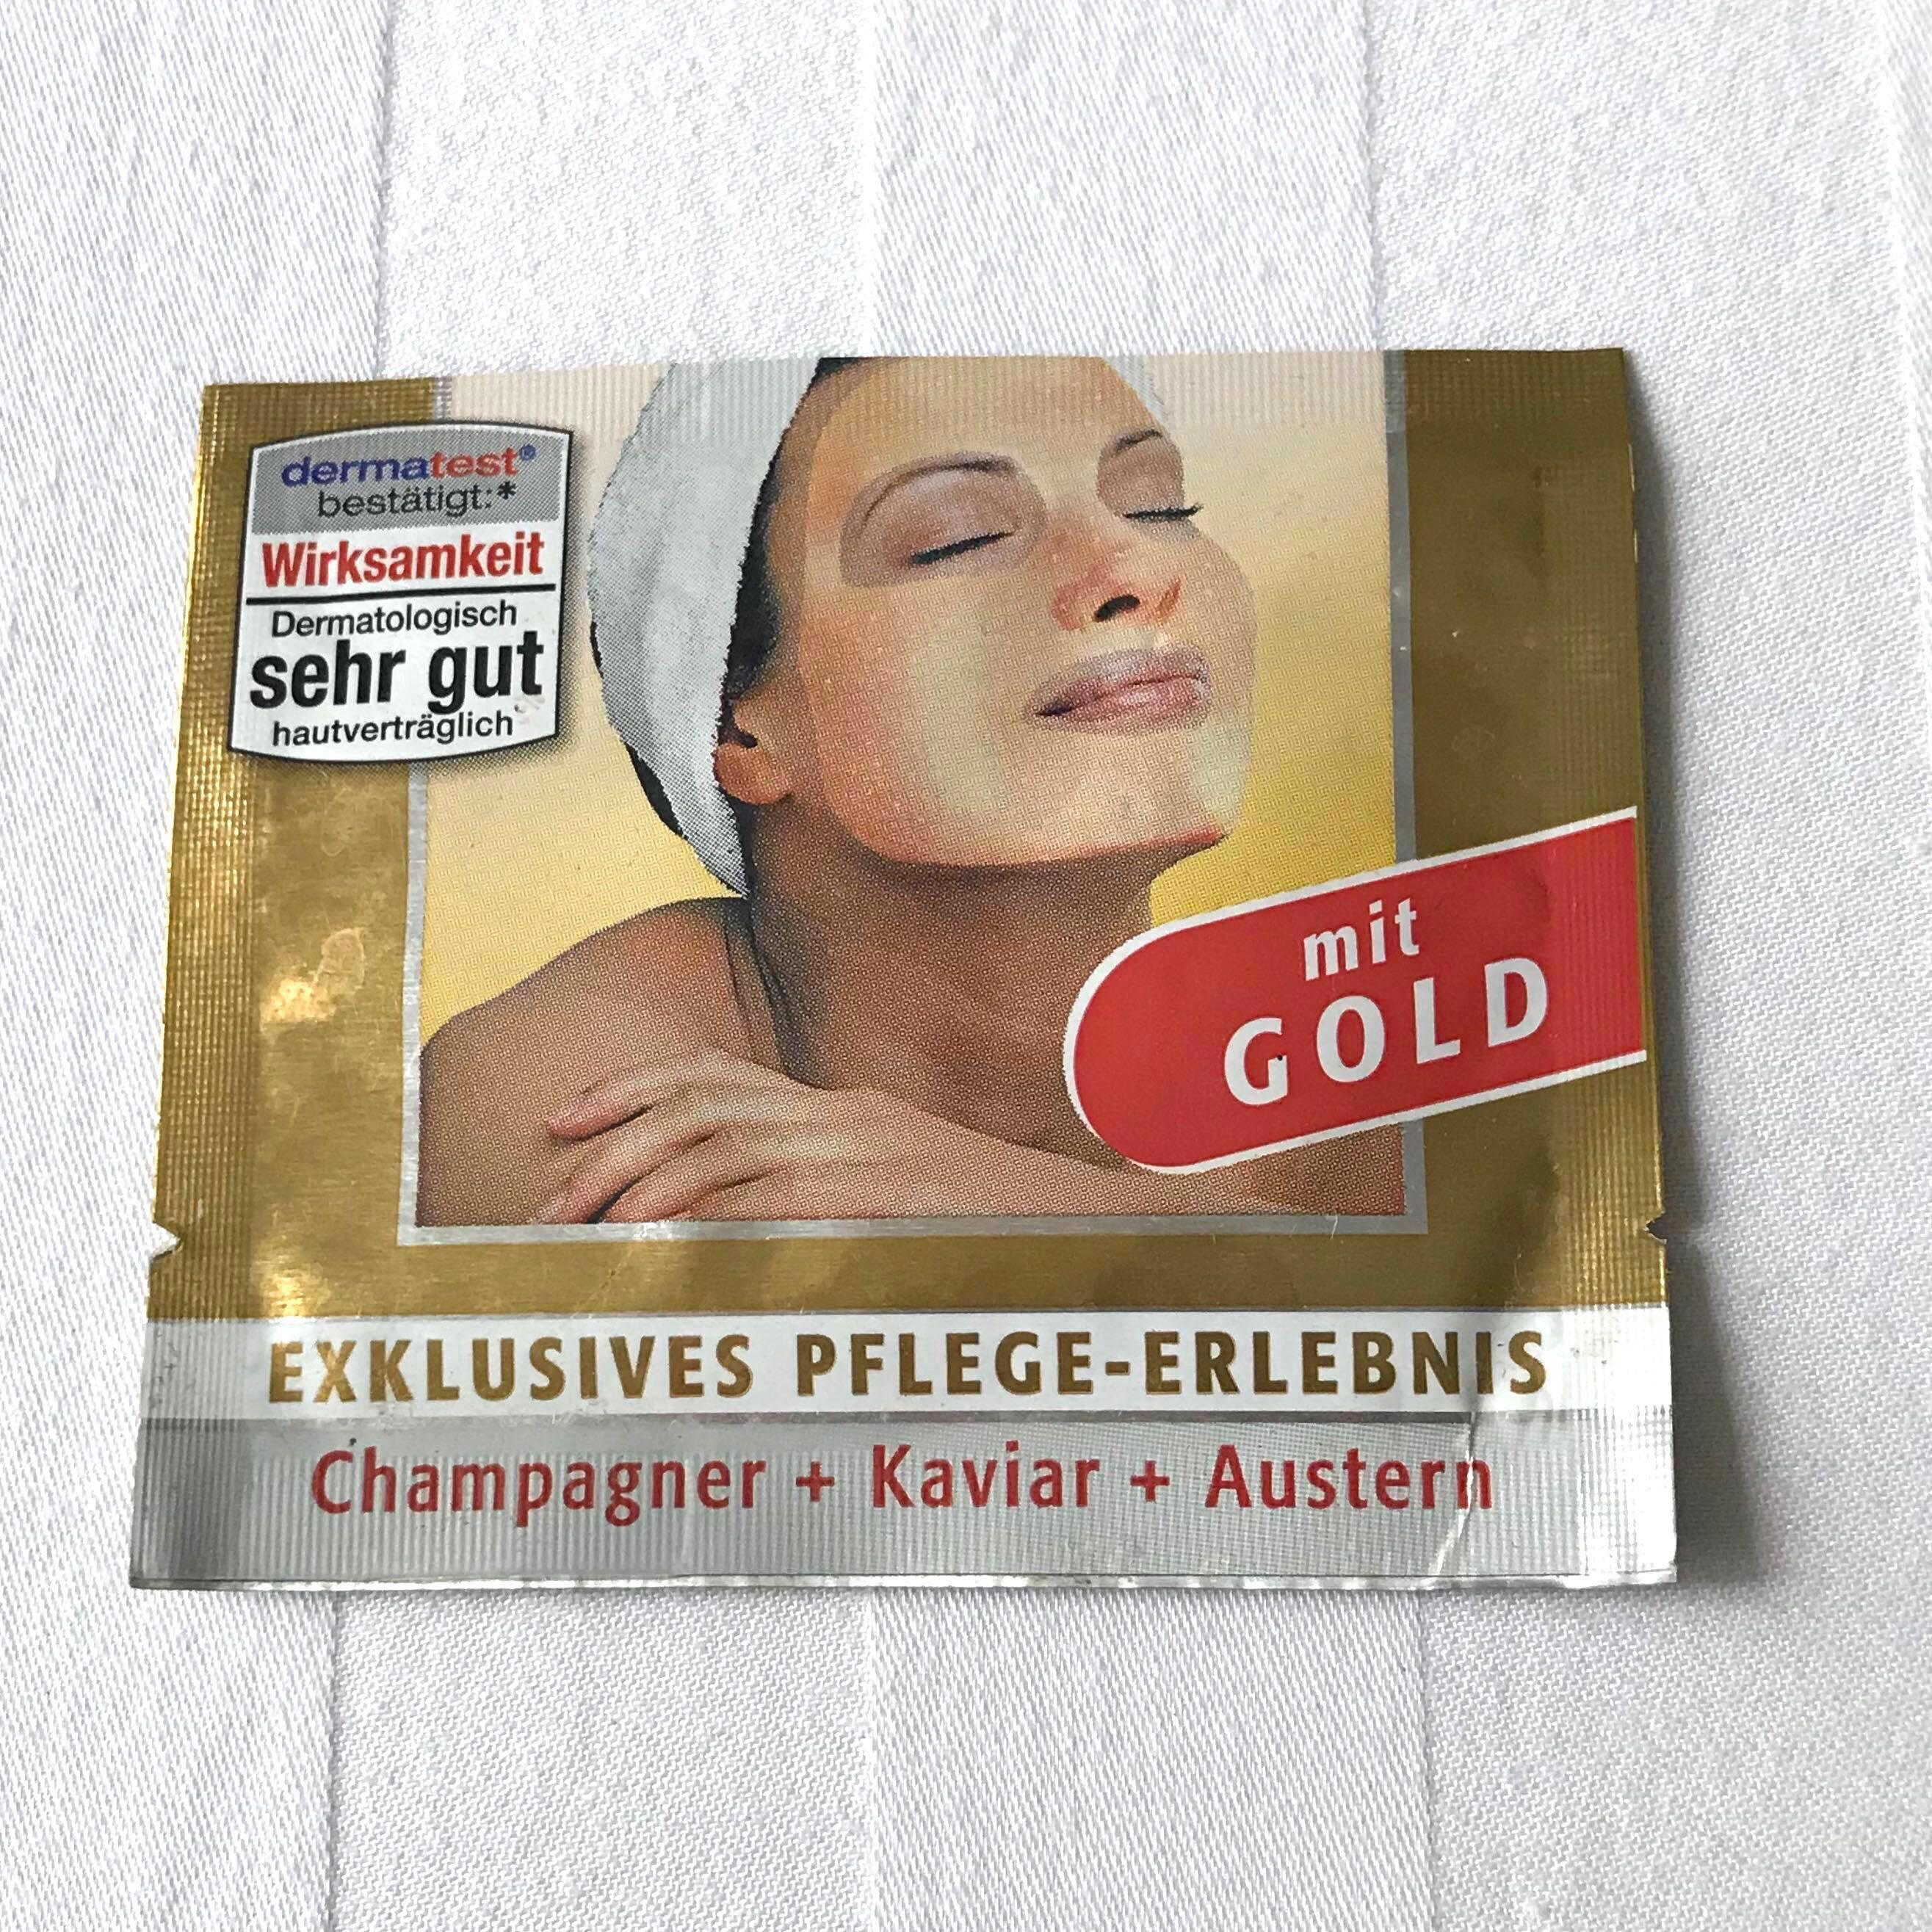 10 x 5ml Schaebens luxury moisturizing mask with gold, champagne and caviar  New